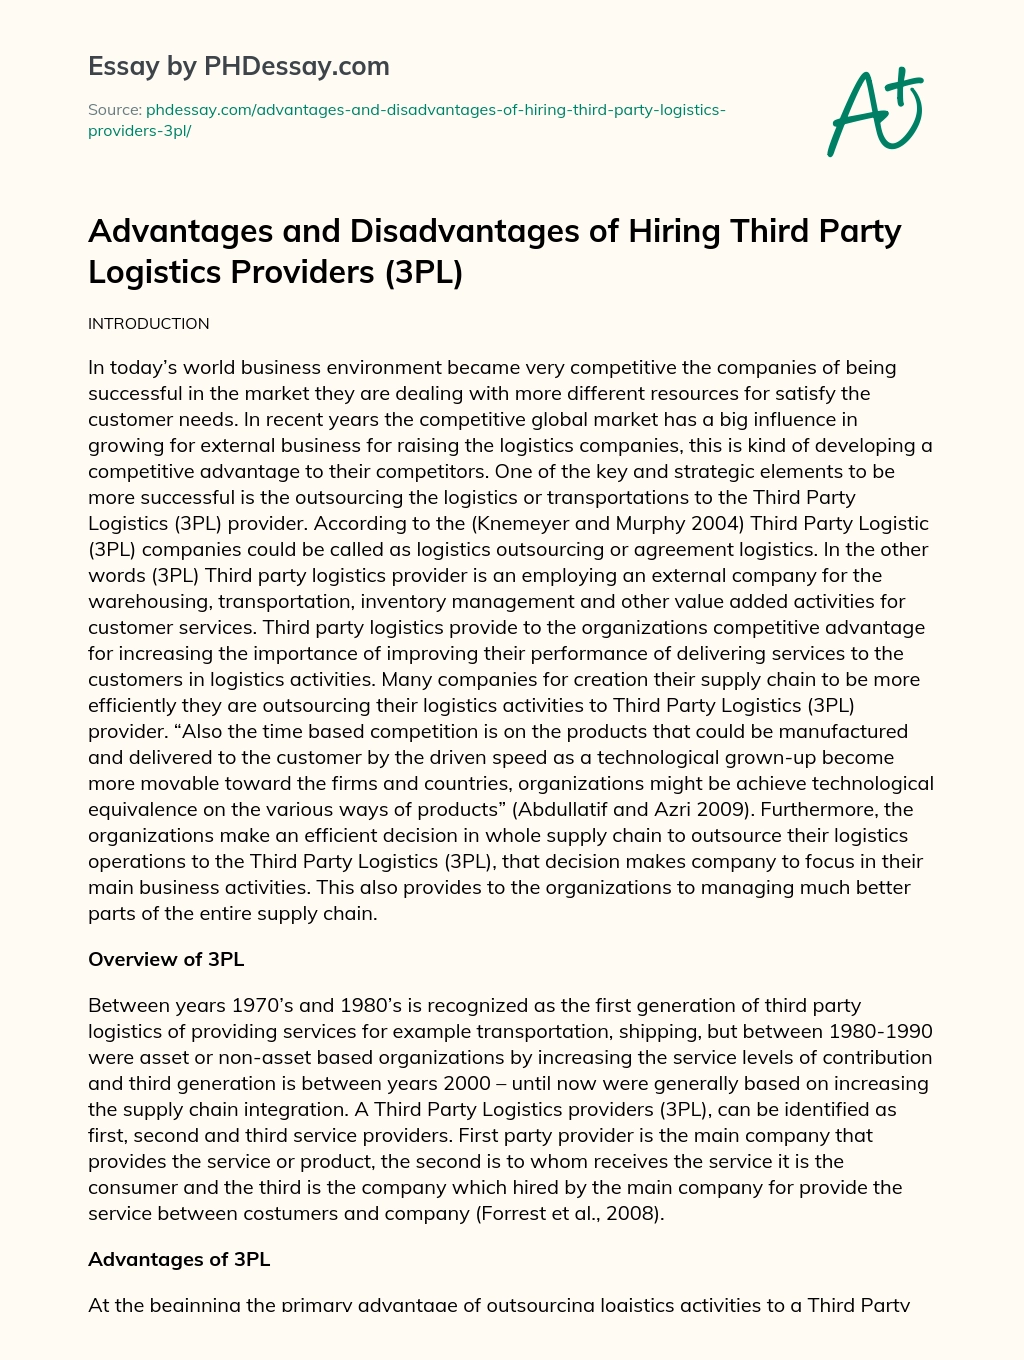 Advantages and Disadvantages of Hiring Third Party Logistics Providers (3PL) essay